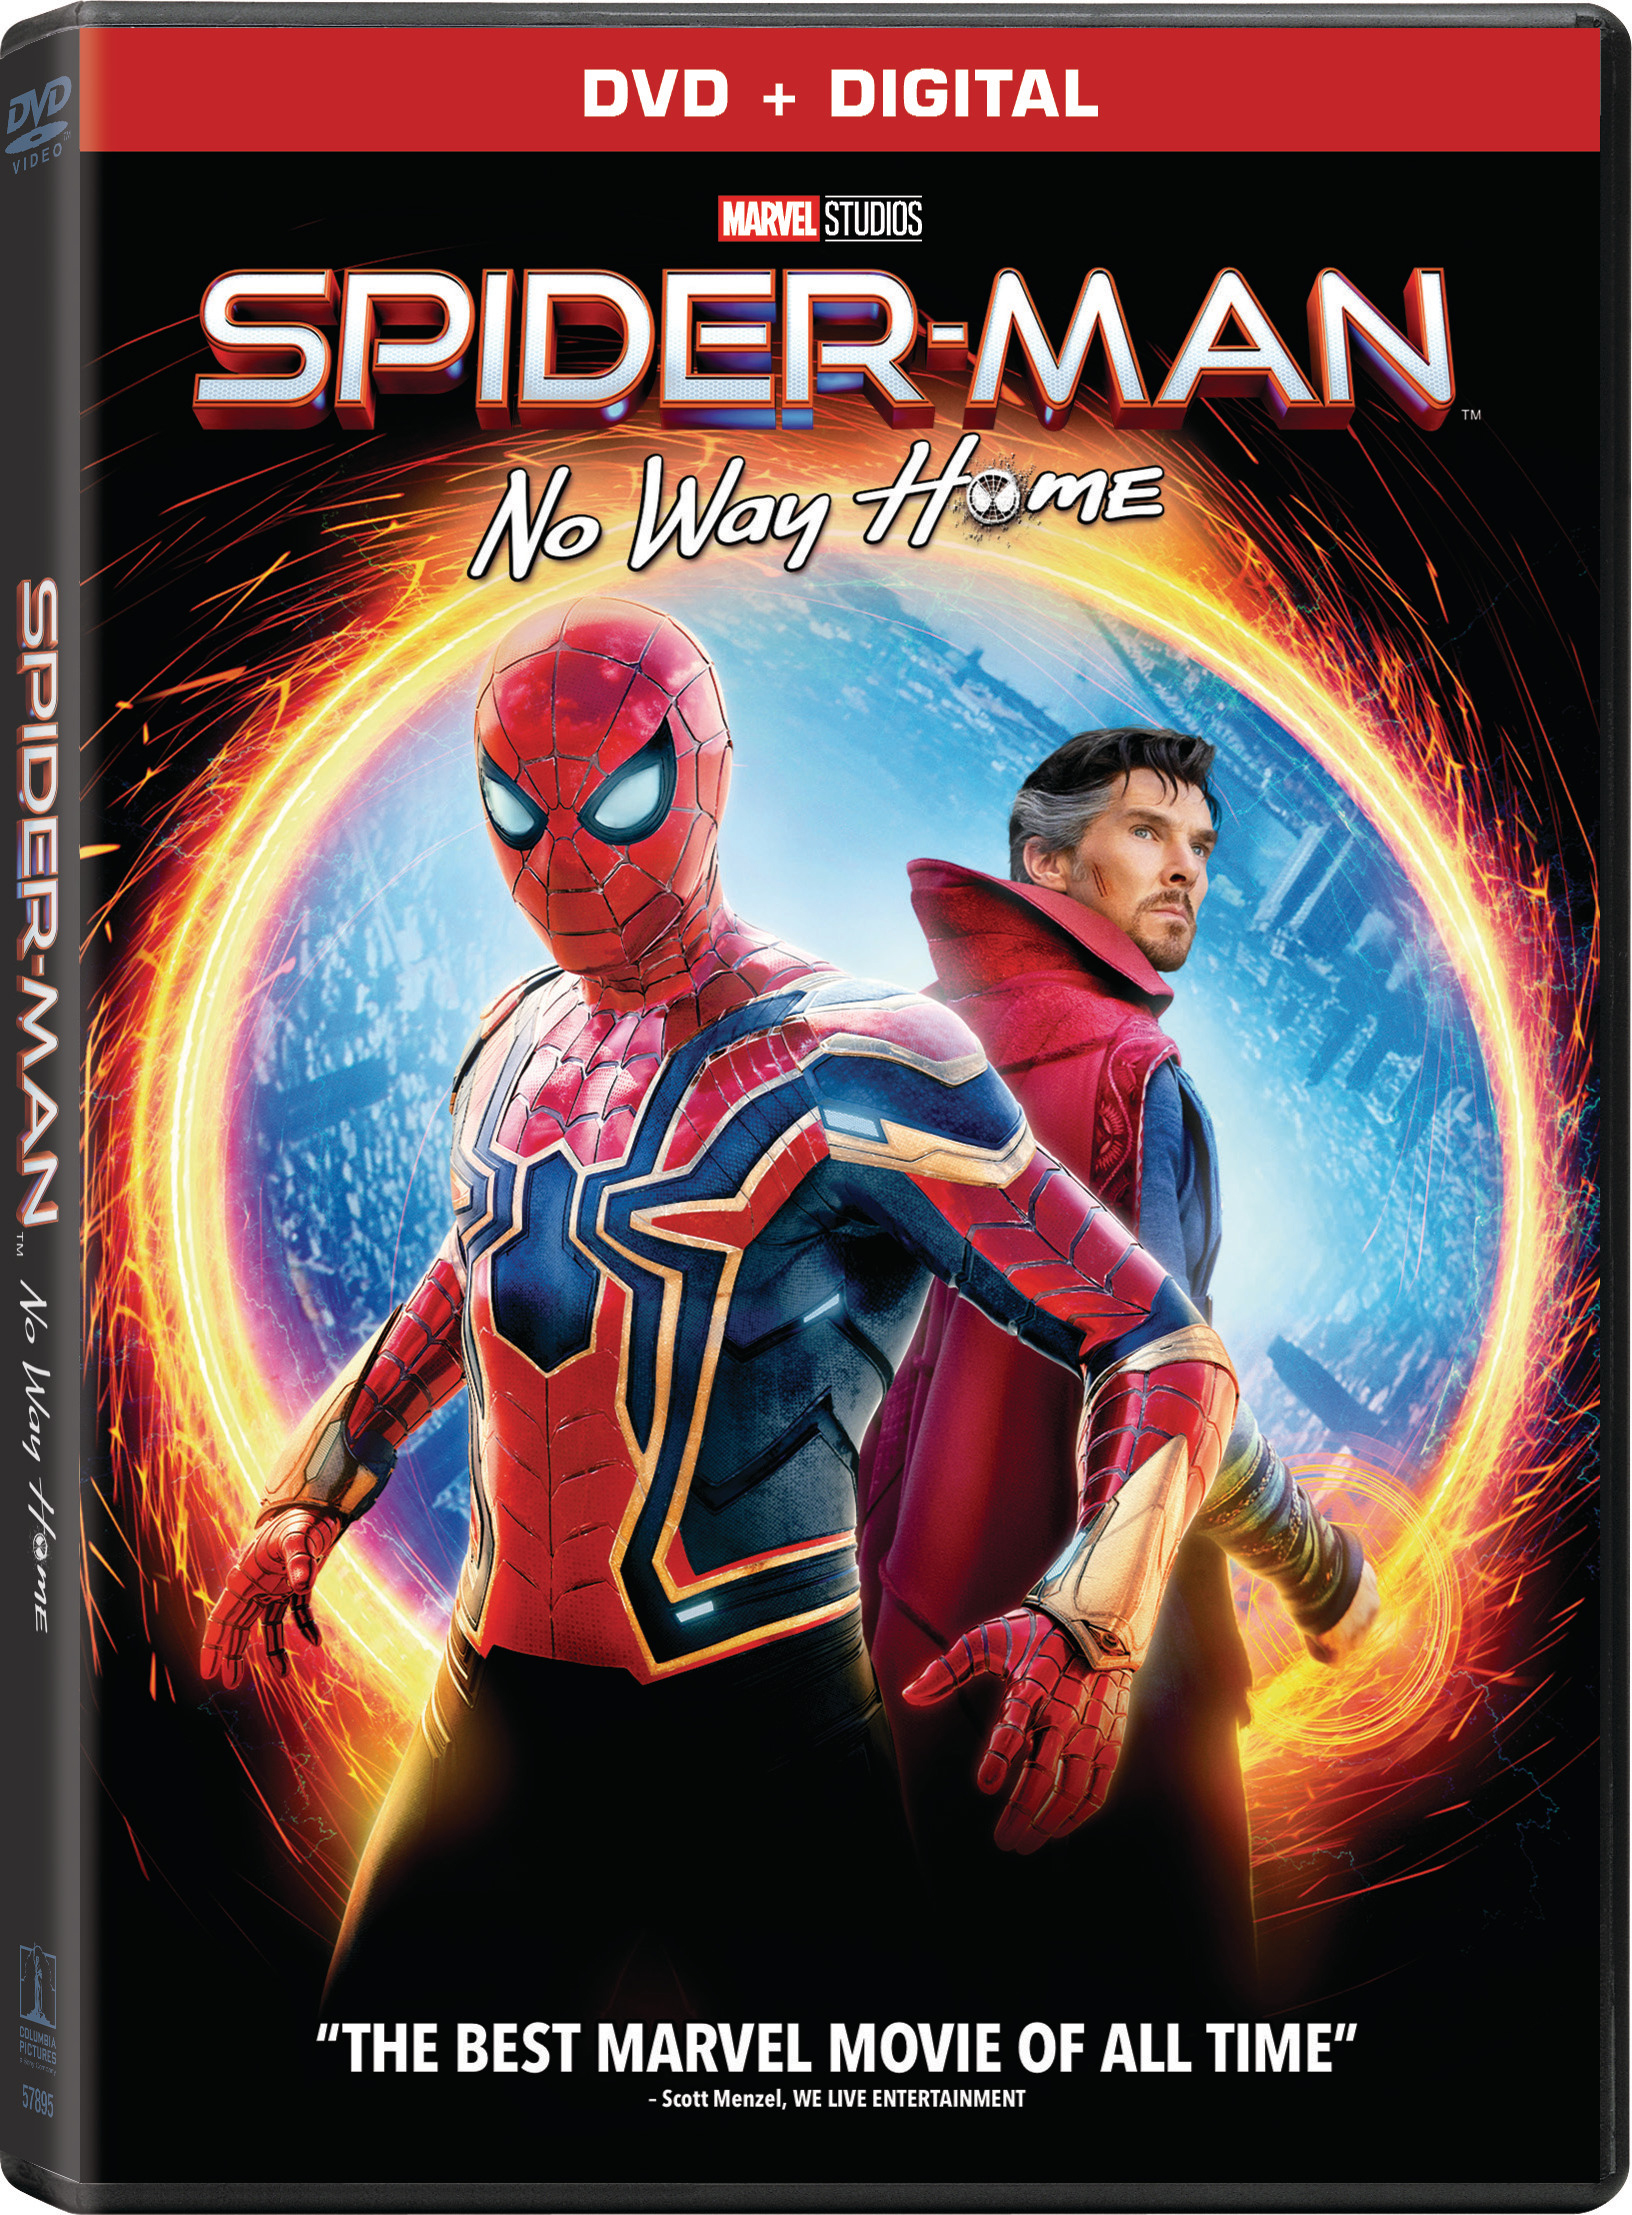 The Amazing Spider-Man 2 [3 Discs] [Includes Digital Copy] [Blu-ray/DVD]  [2014] - Best Buy